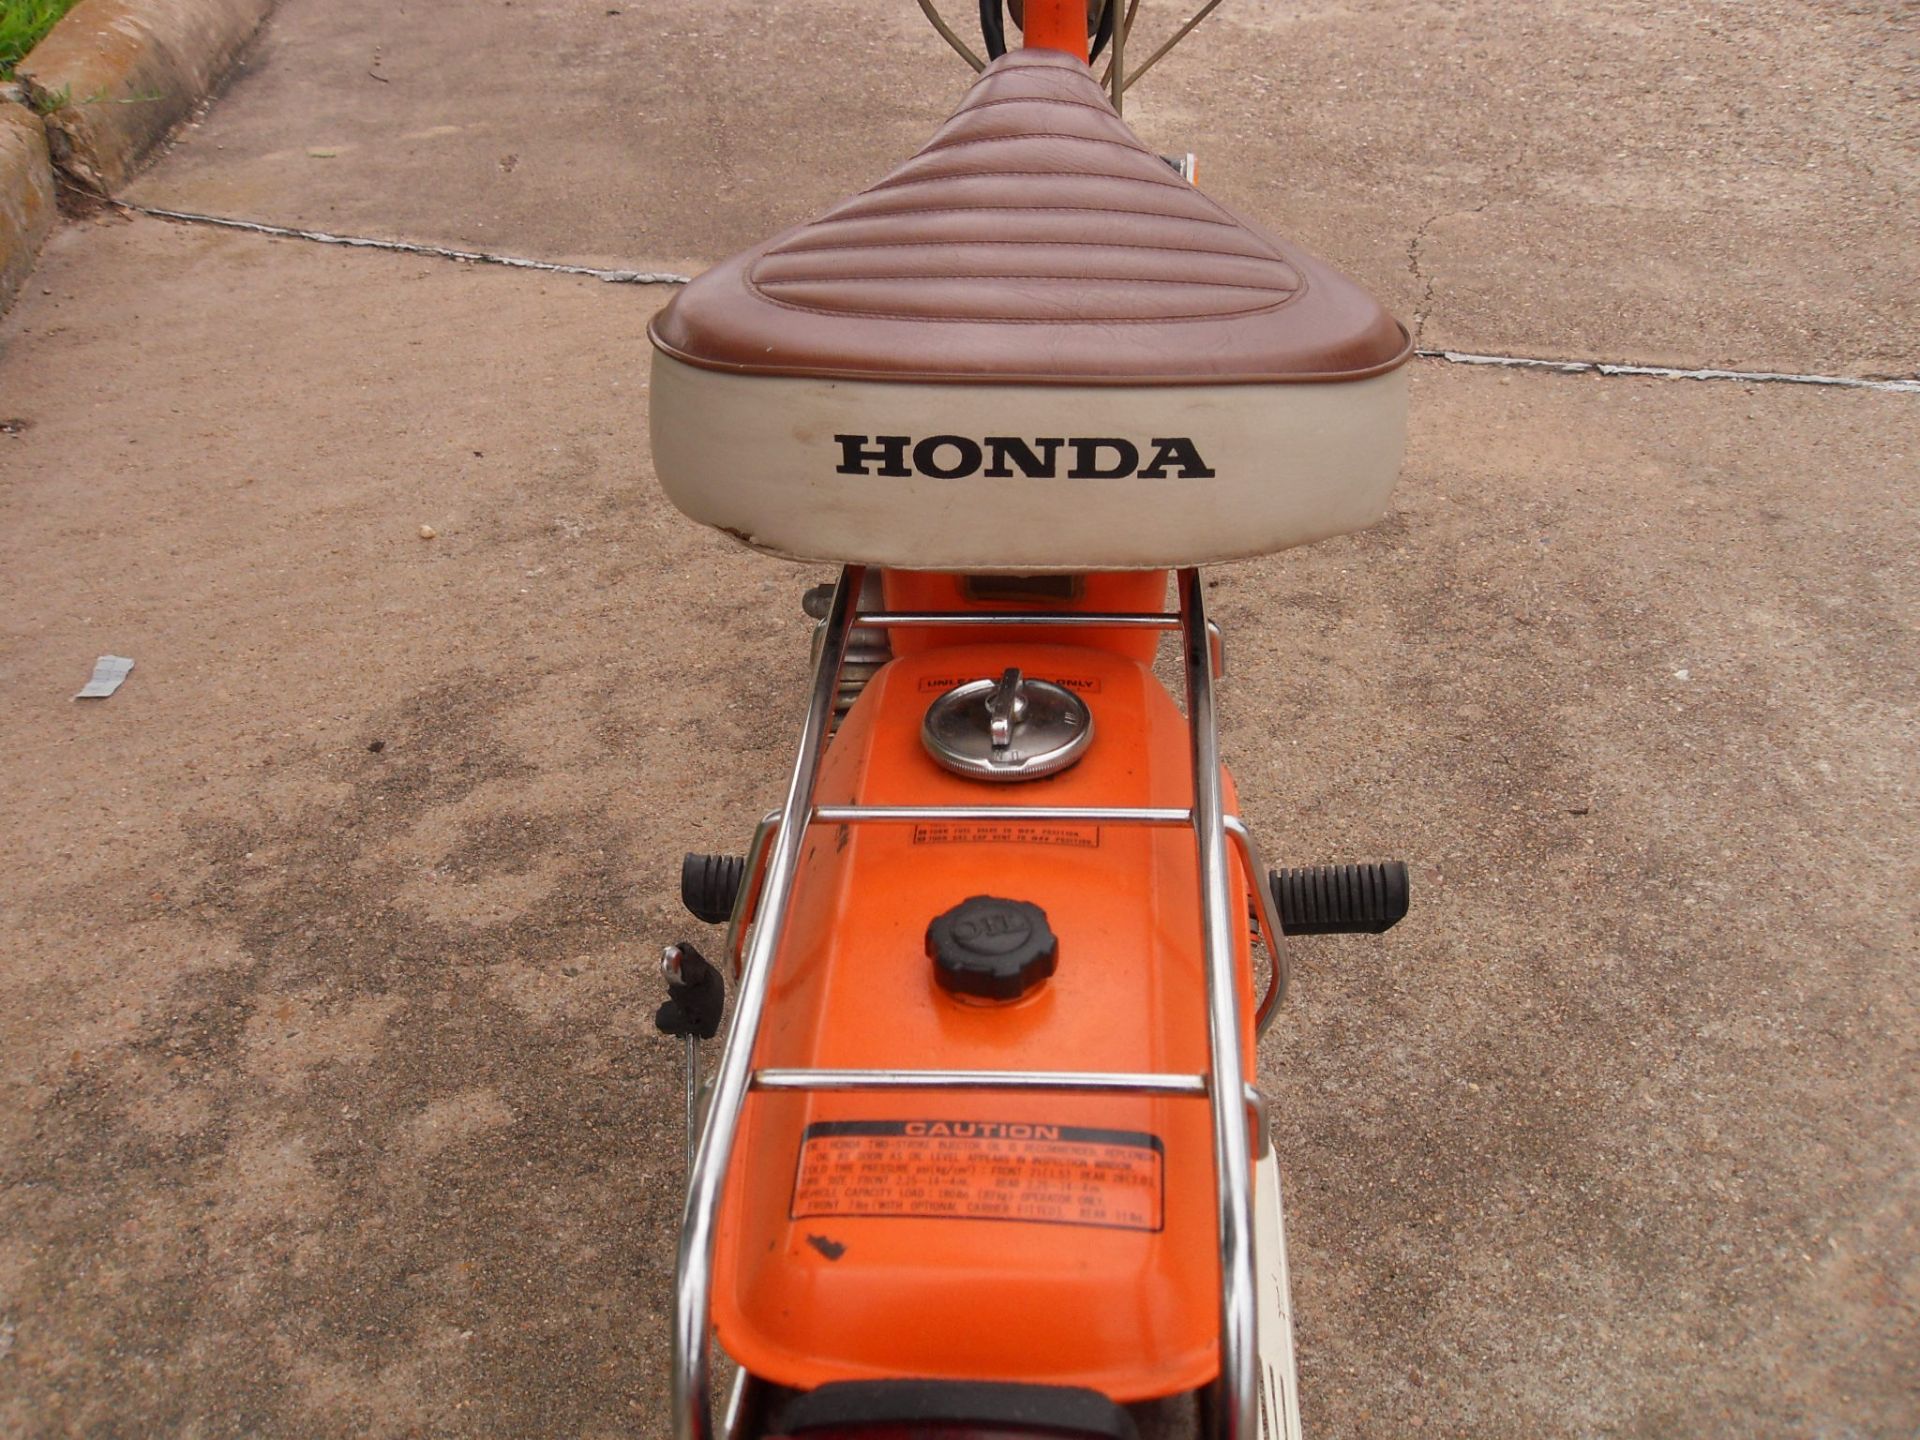 1978 Honda Express NC50 Scooter - Image 5 of 8